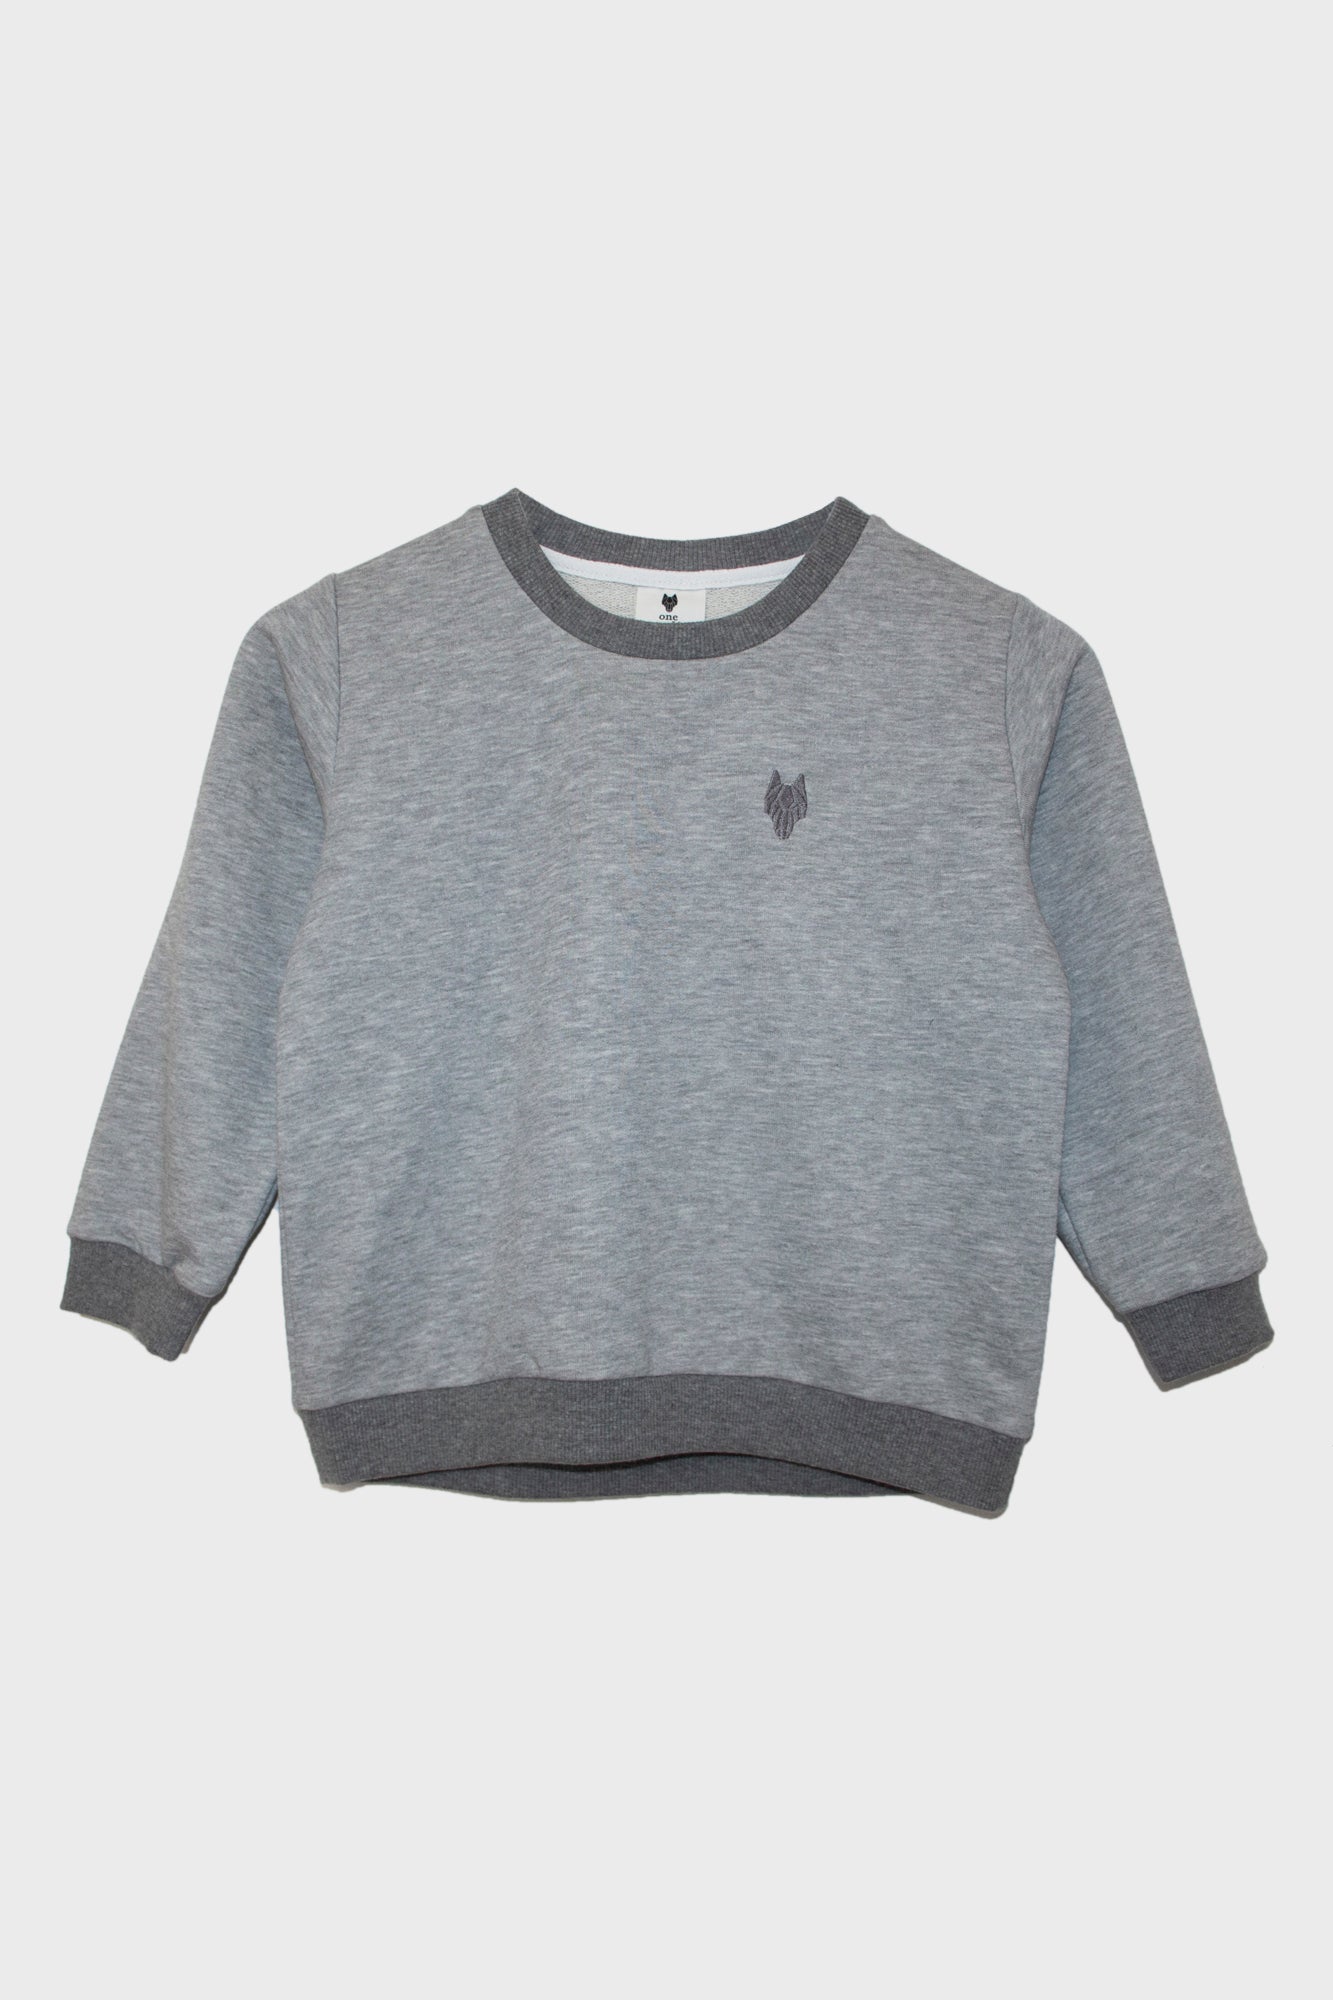 Kid’s One Wolf sweater, grey/dark grey logo - not brushed